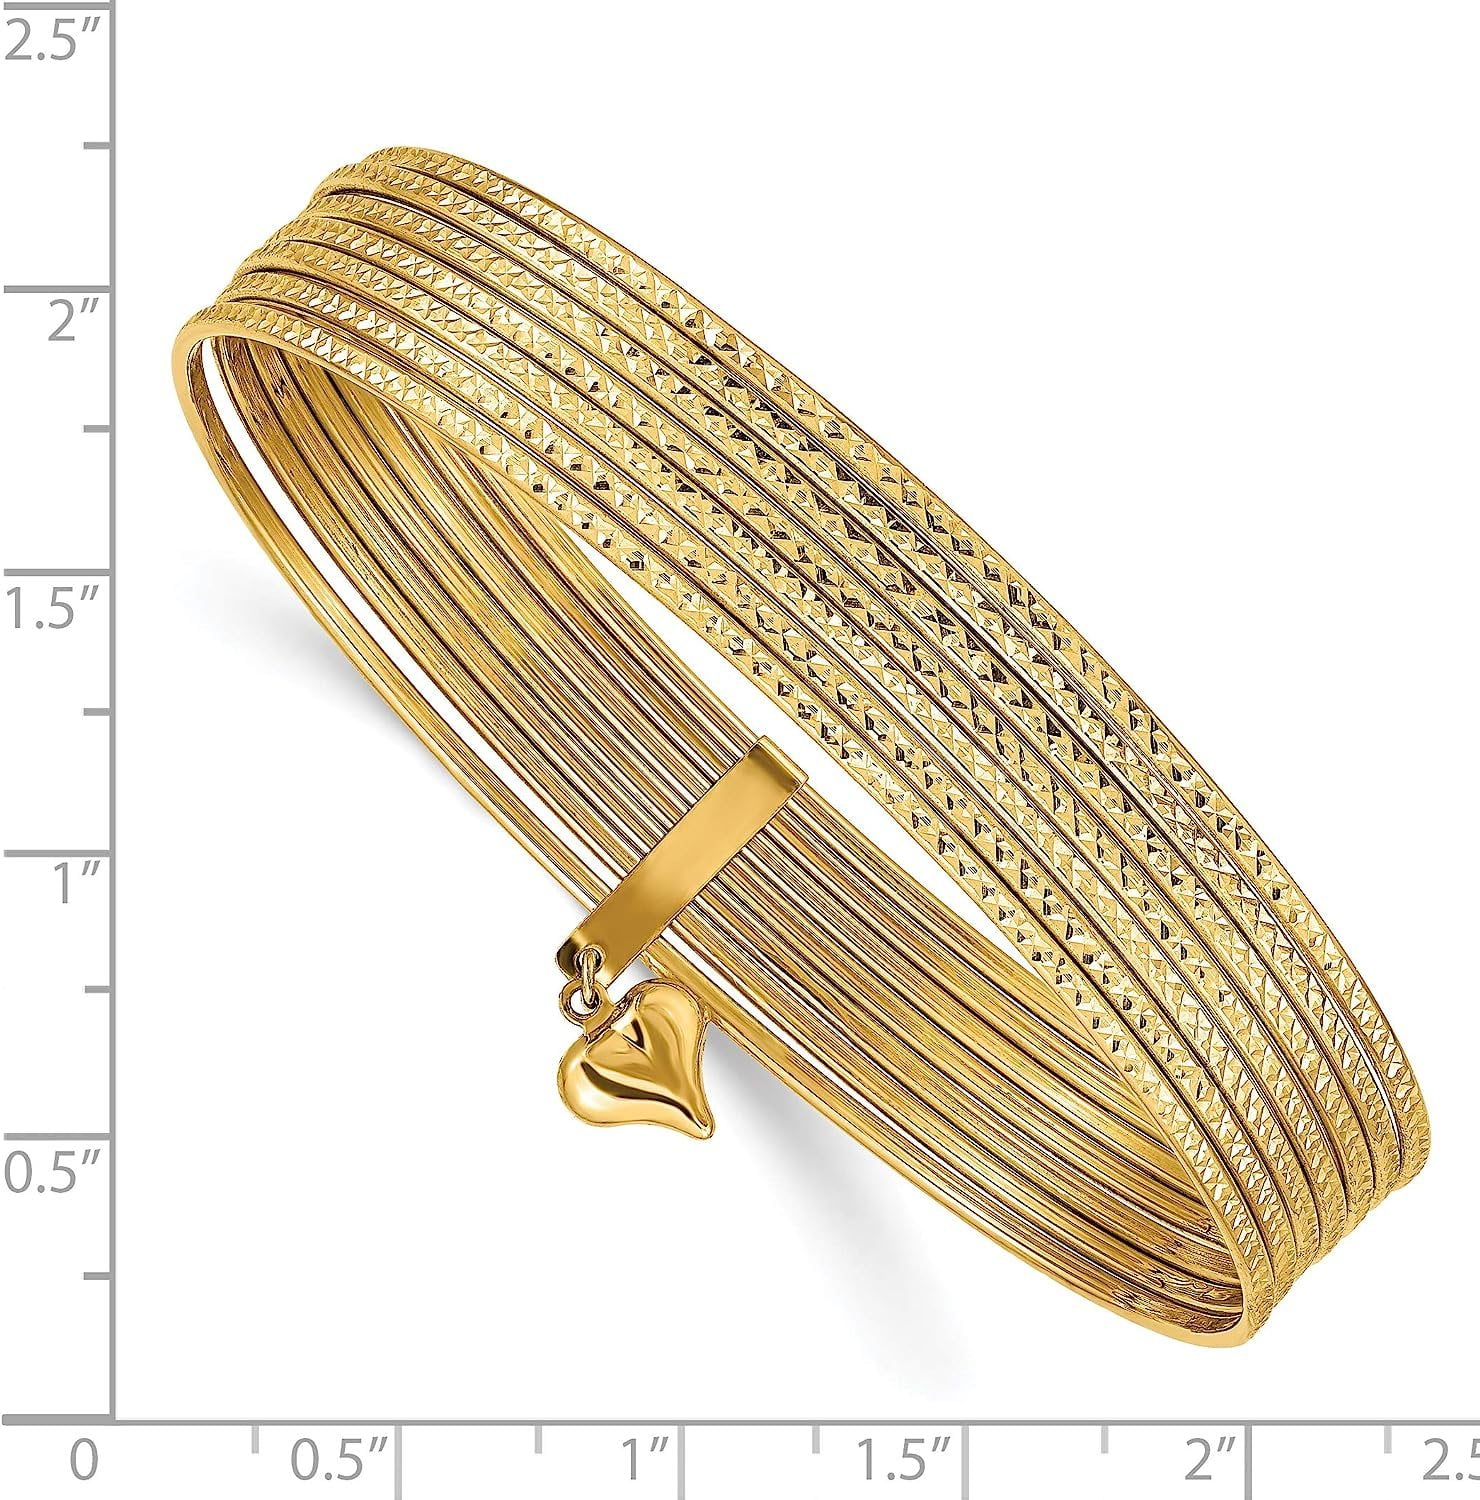 14K Yellow Gold Heart Charm Bracelet 7.5 inch